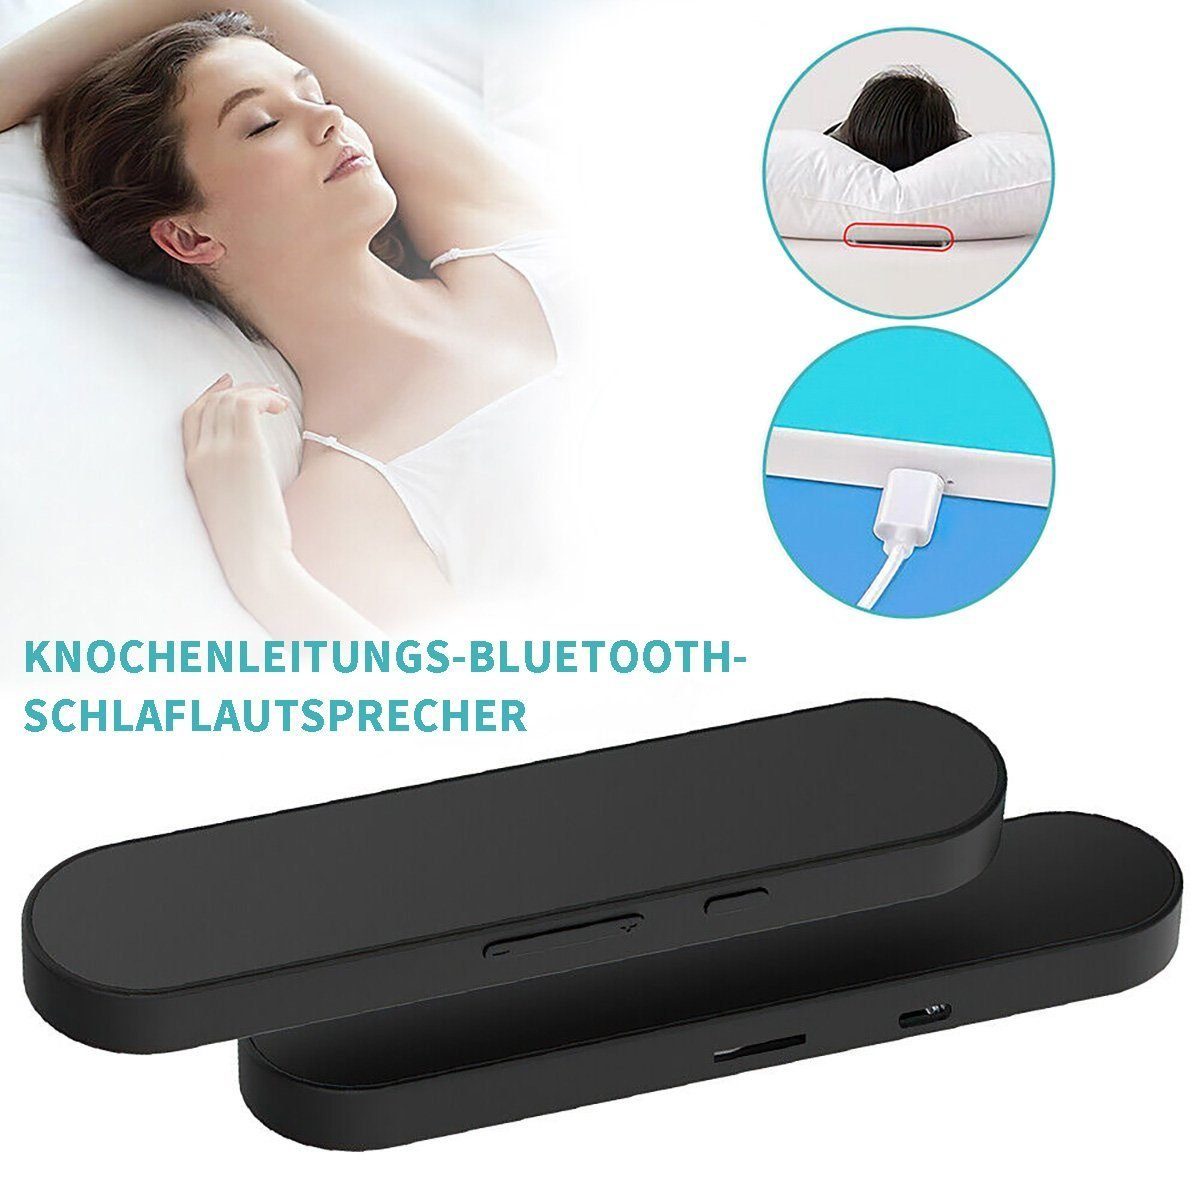 yozhiqu Tragbarer Reise-Stereoklang, 2-Kanal-Bluetooth 5.0 Knochenschall-Box Stereo-Headset (Bietet hochwertigen Stereo-Klang und Bluetooth 5.0 Konnektivität)